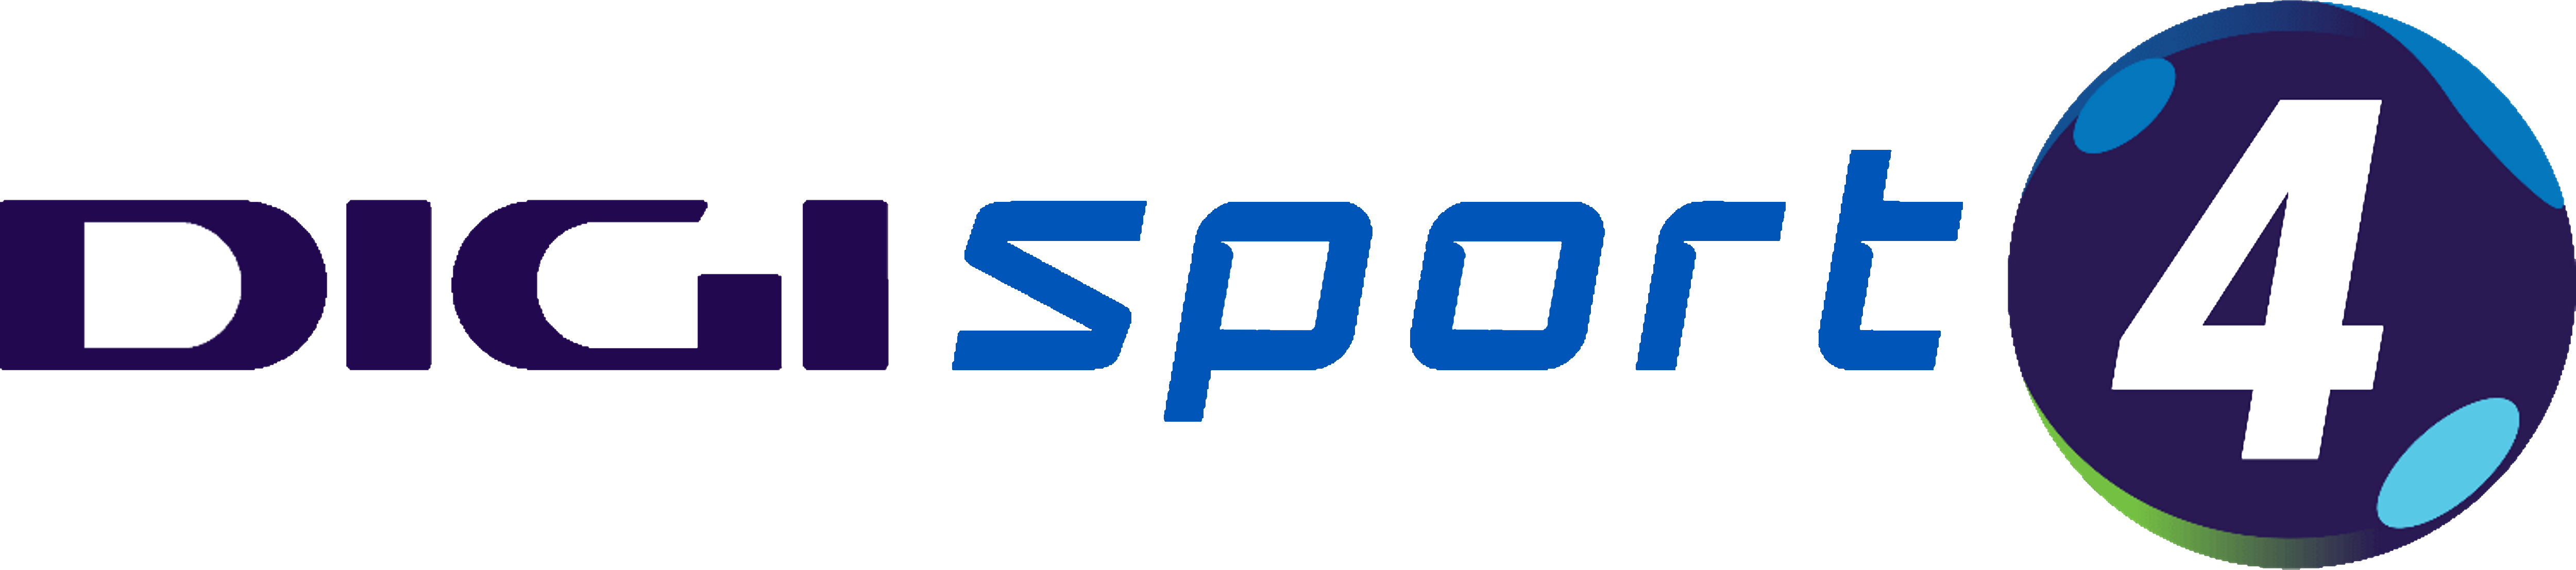 3 Sport Телеканал. Sport1 лого. BT Sport 2 лого.